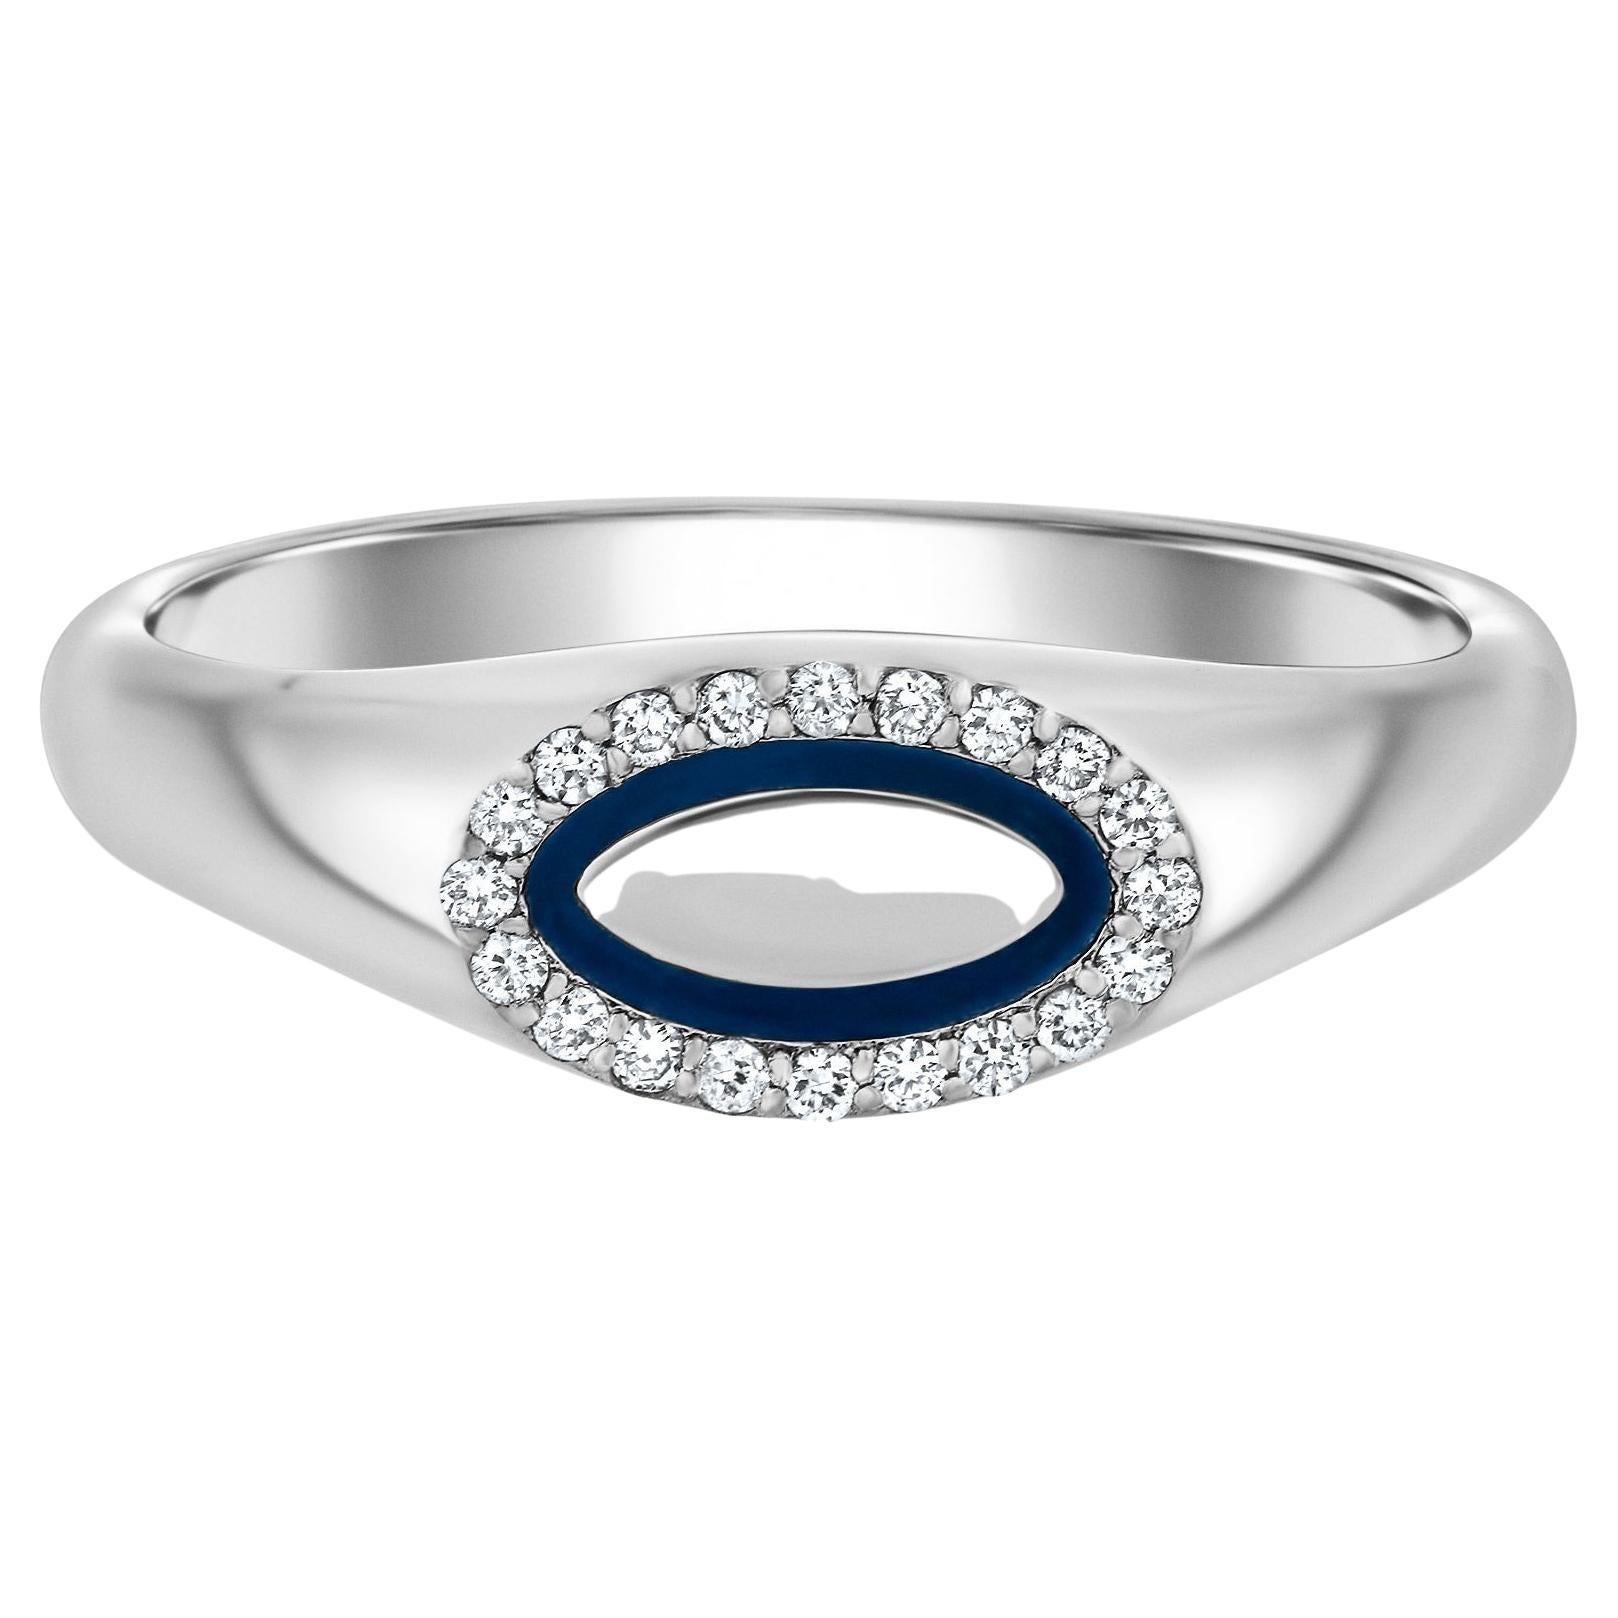 For Sale:  Powerful Men's 14K White Gold Diamond and Enamel Signet Ring by Shlomit Rogel